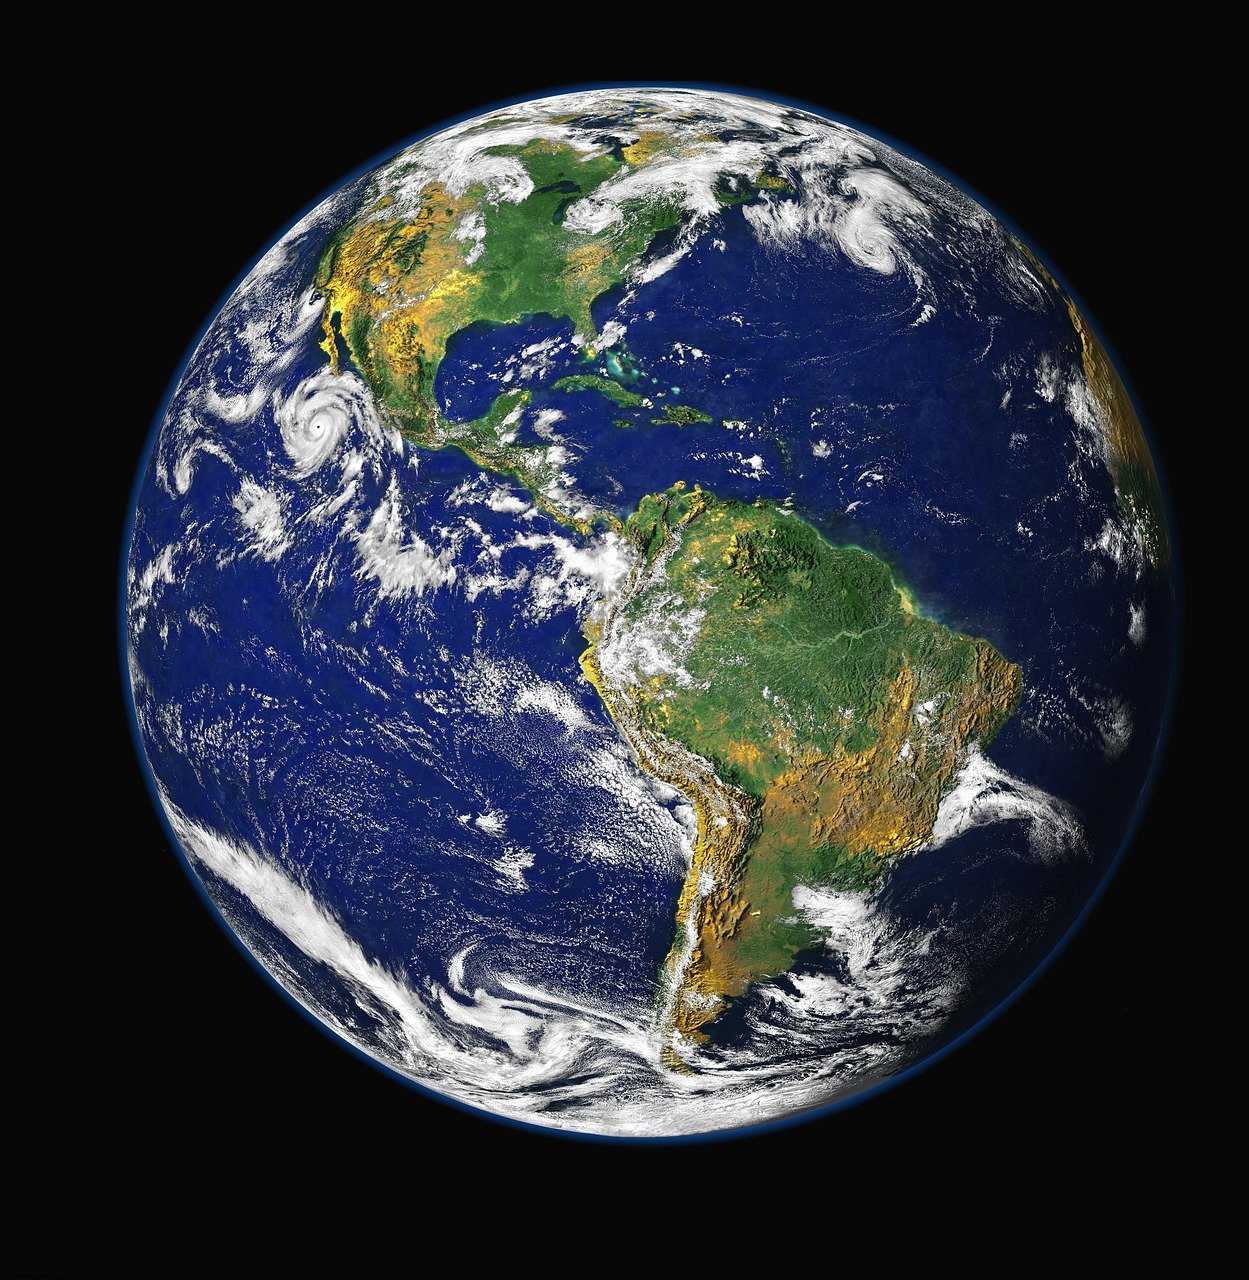 foto do planeta terra visto de longe, tendo por foco as Américas